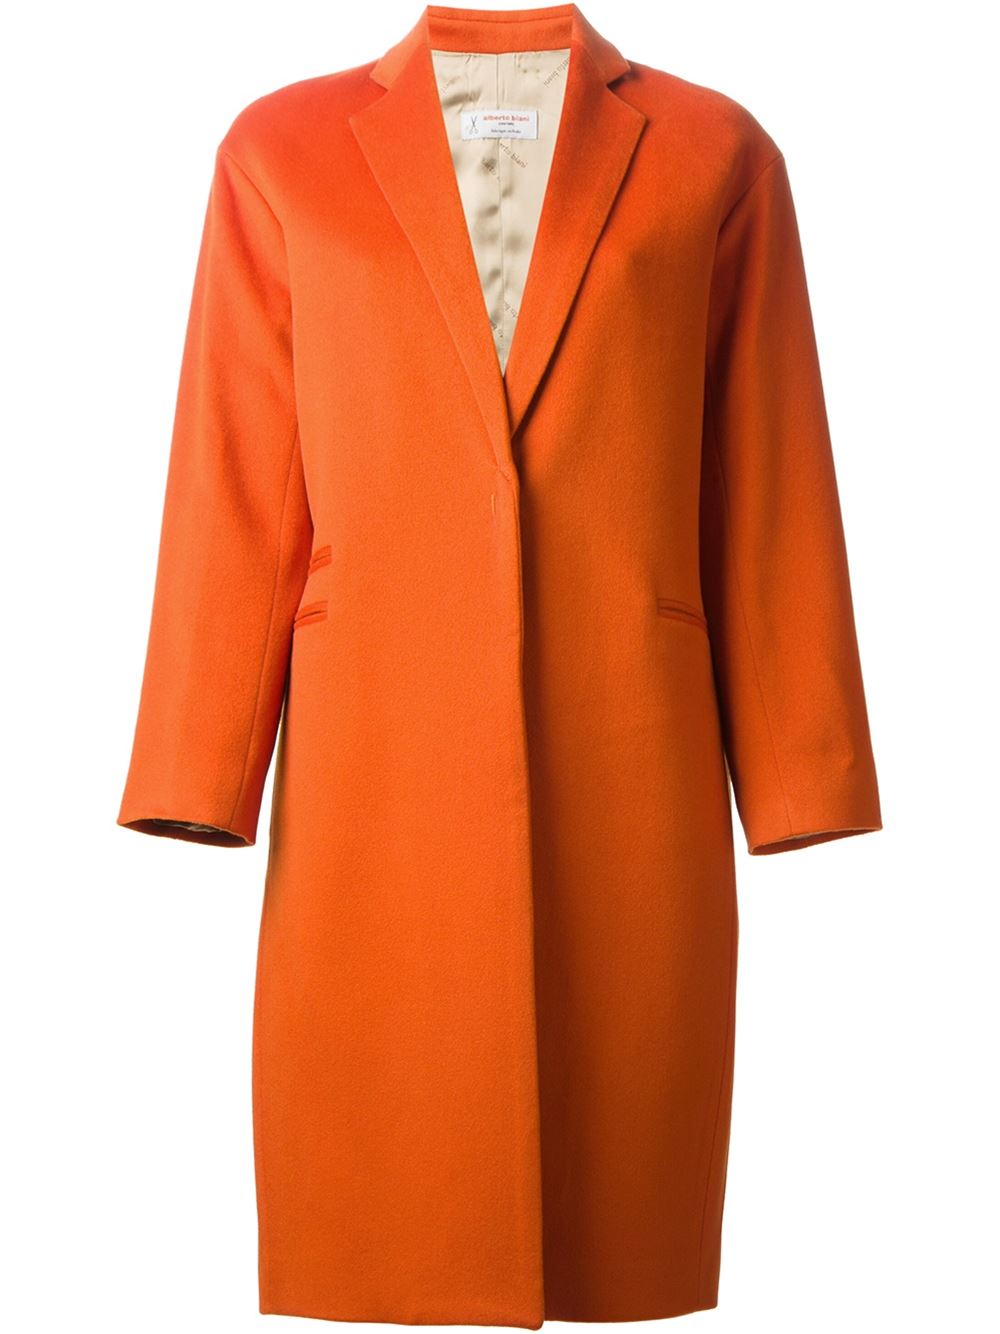 Orange virgin wool single breasted coat from Alberto Biani